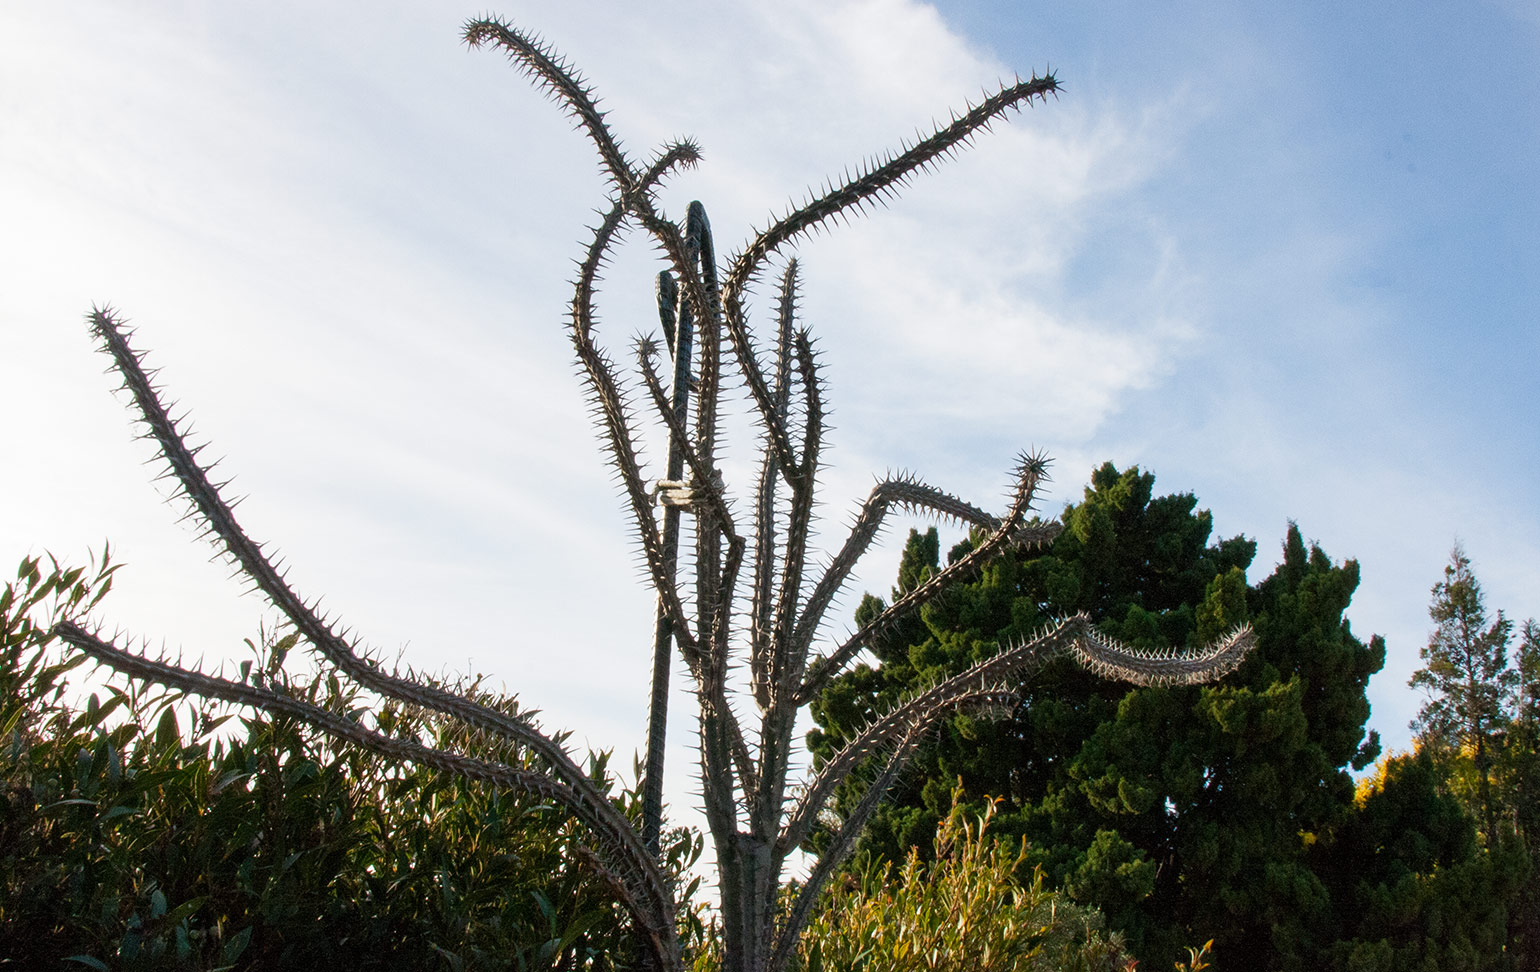 A cactus at Hobart Botanical Gardens